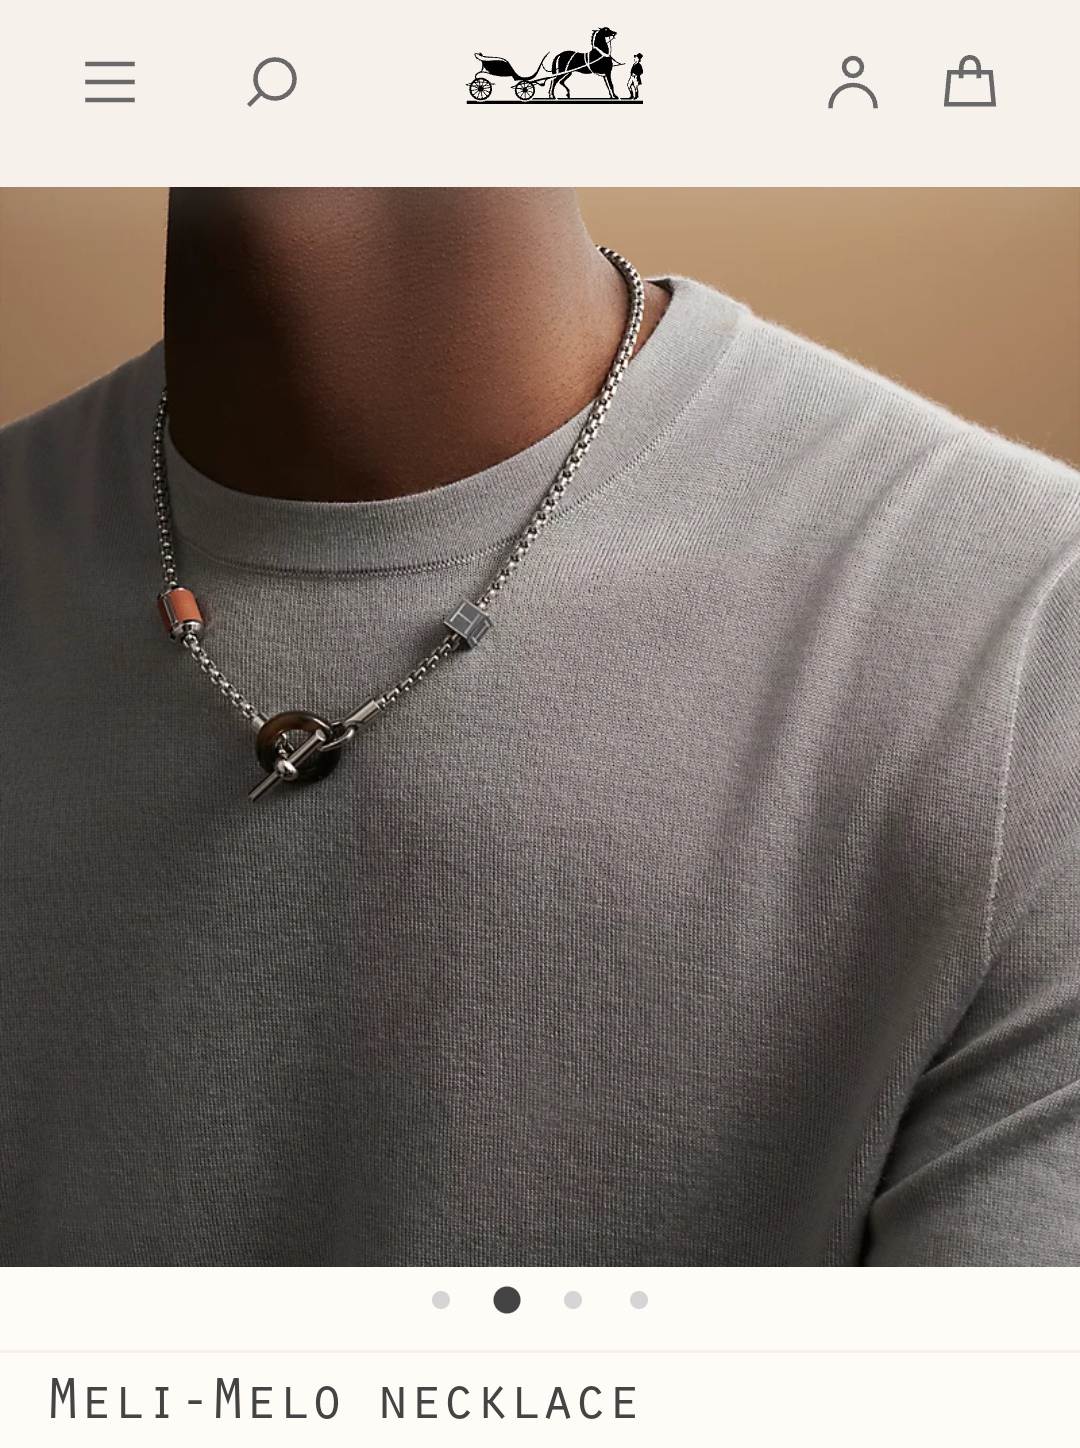 Hermes necklace